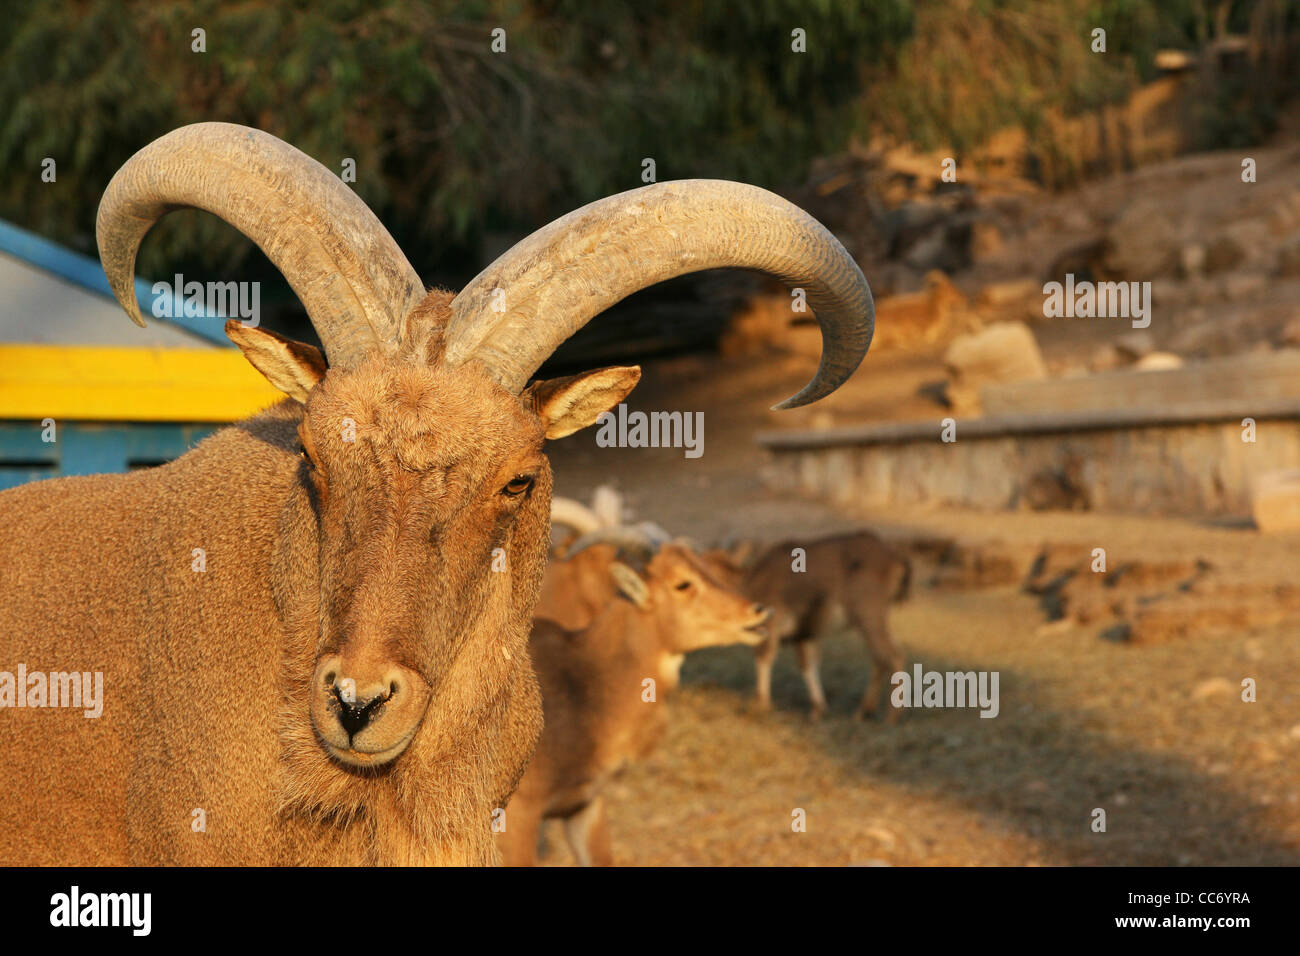 Mutton at 'Valle des Oiseaux. Agadir, Morocco. Stock Photo